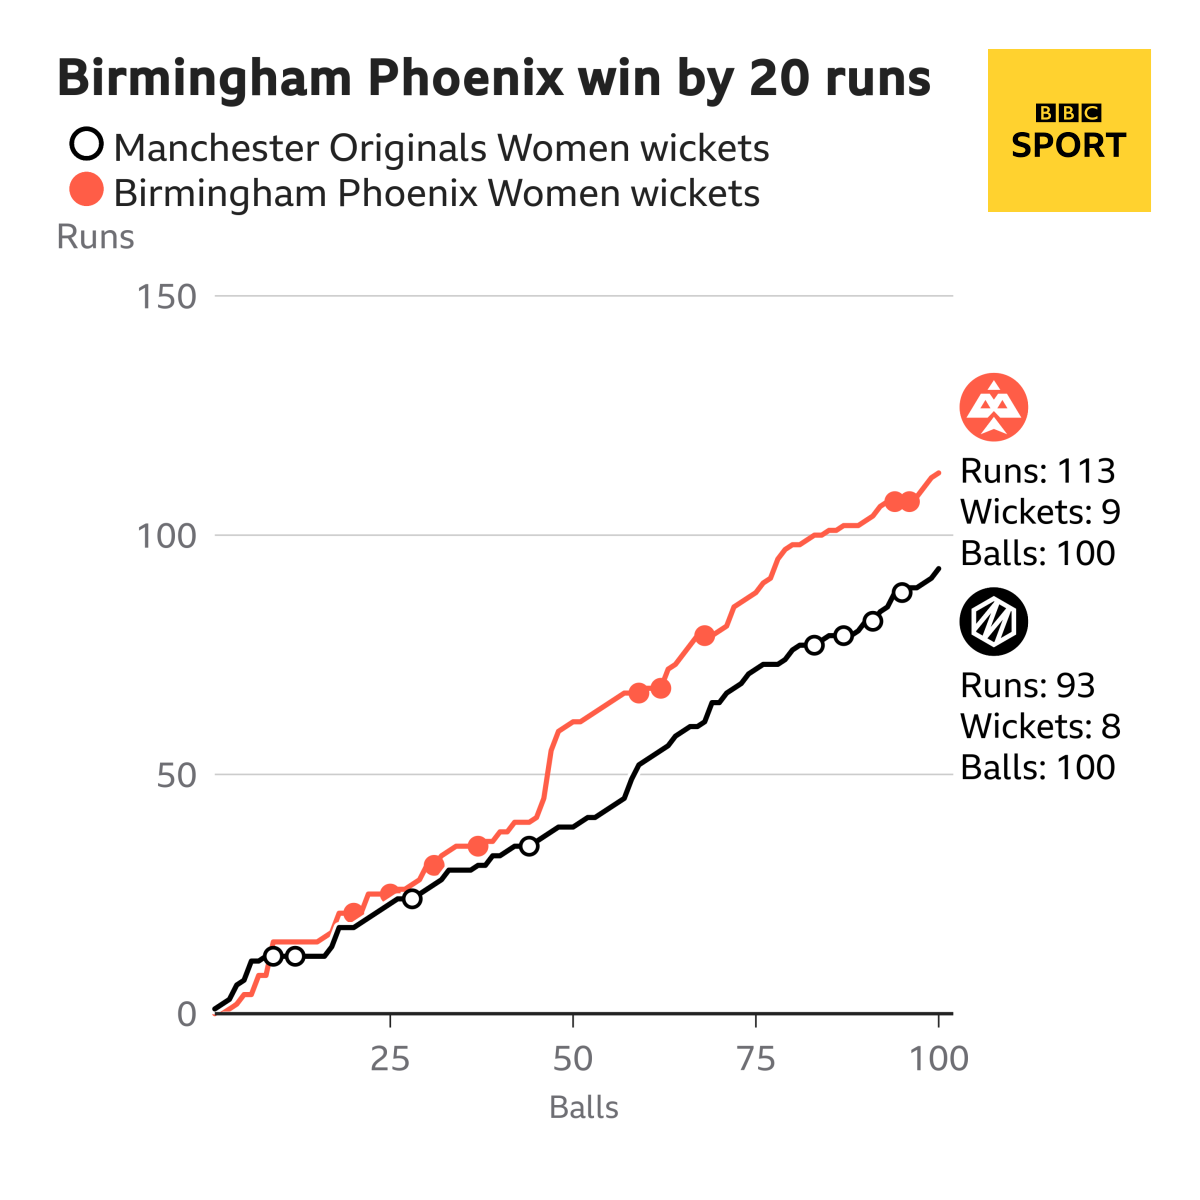 A worm showing how far behind Manchester Originals women were in their chase against Birmingham Phoenix